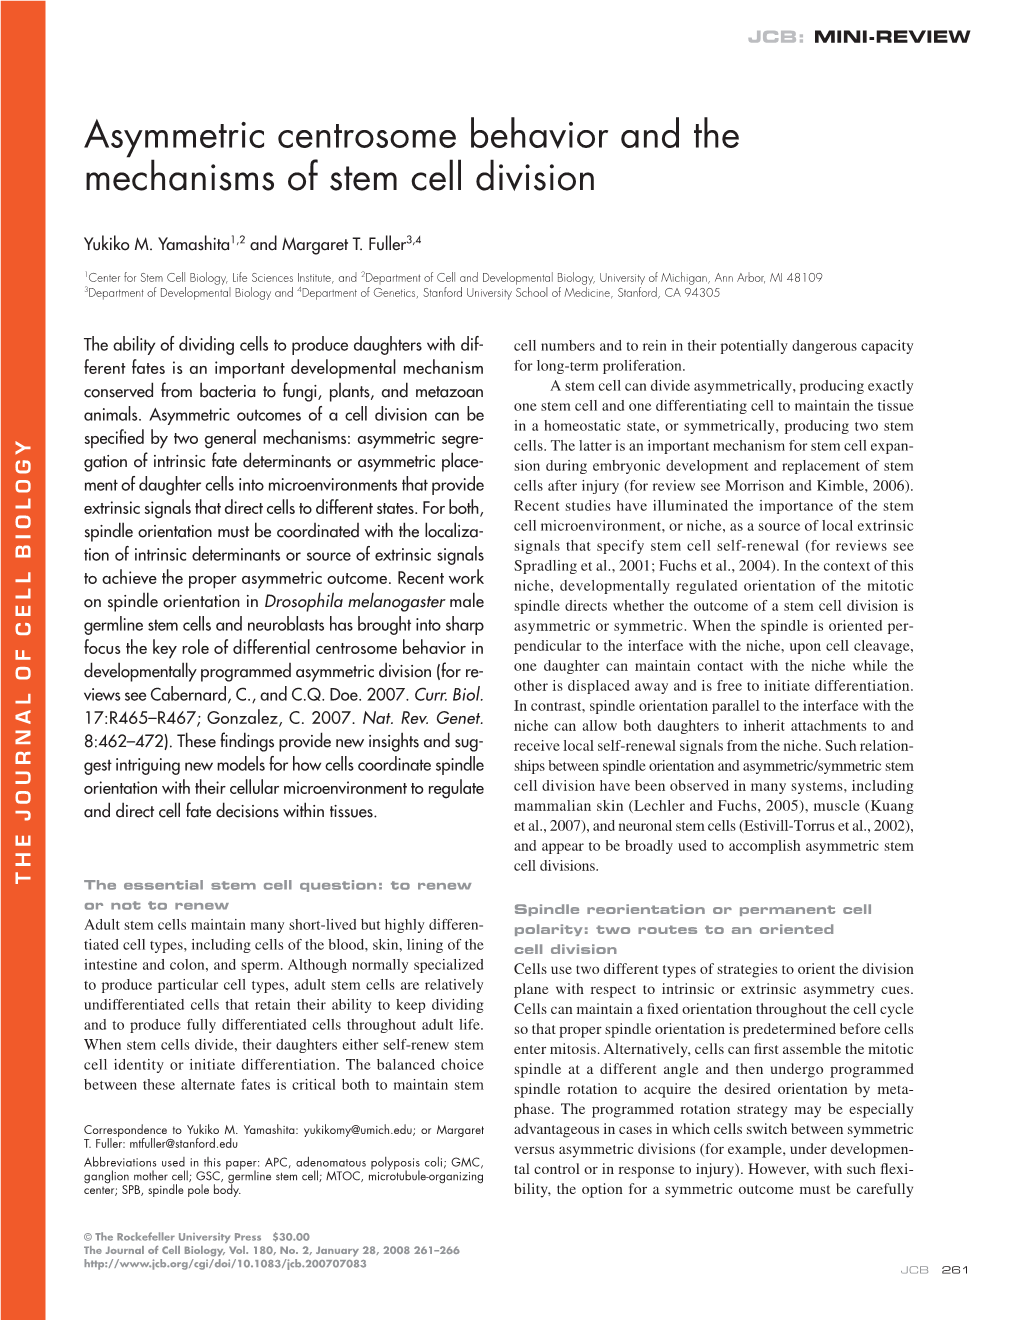 Asymmetric Centrosome Behavior and the Mechanisms of Stem Cell Division